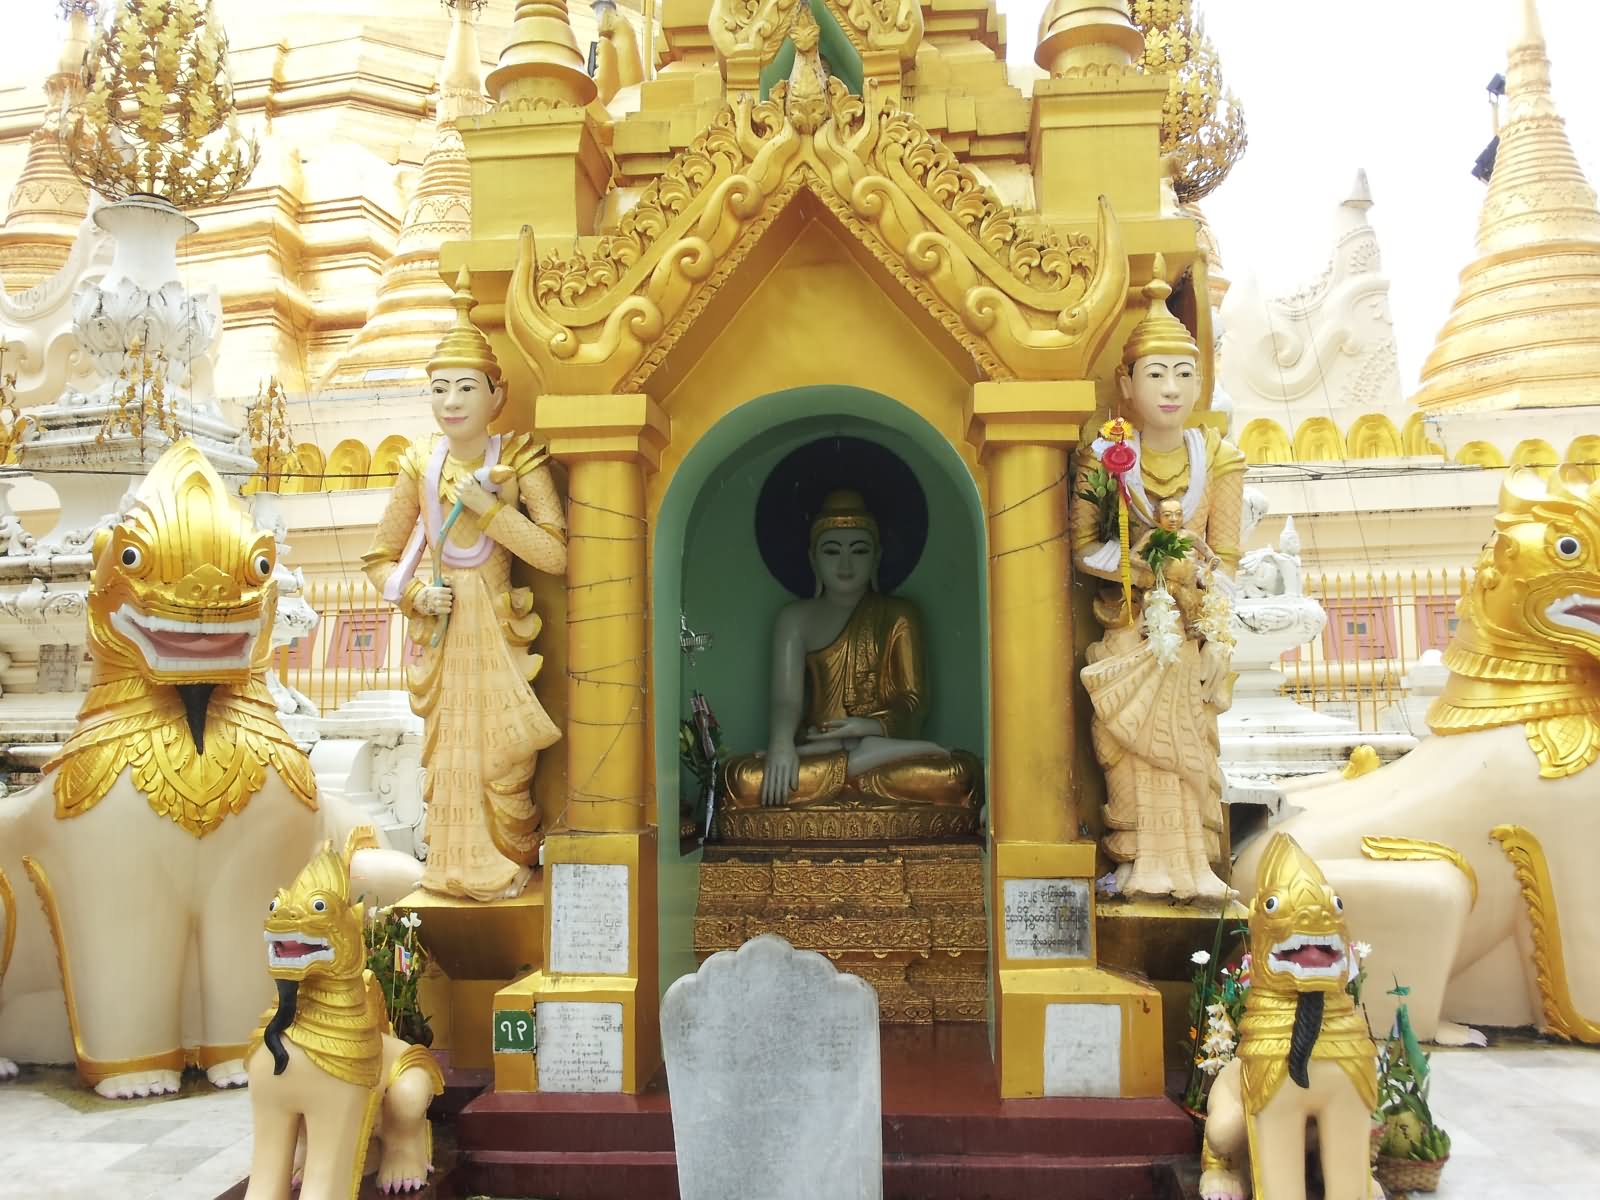 Lord Buddha Statue Inside The Shwedagon Pagoda